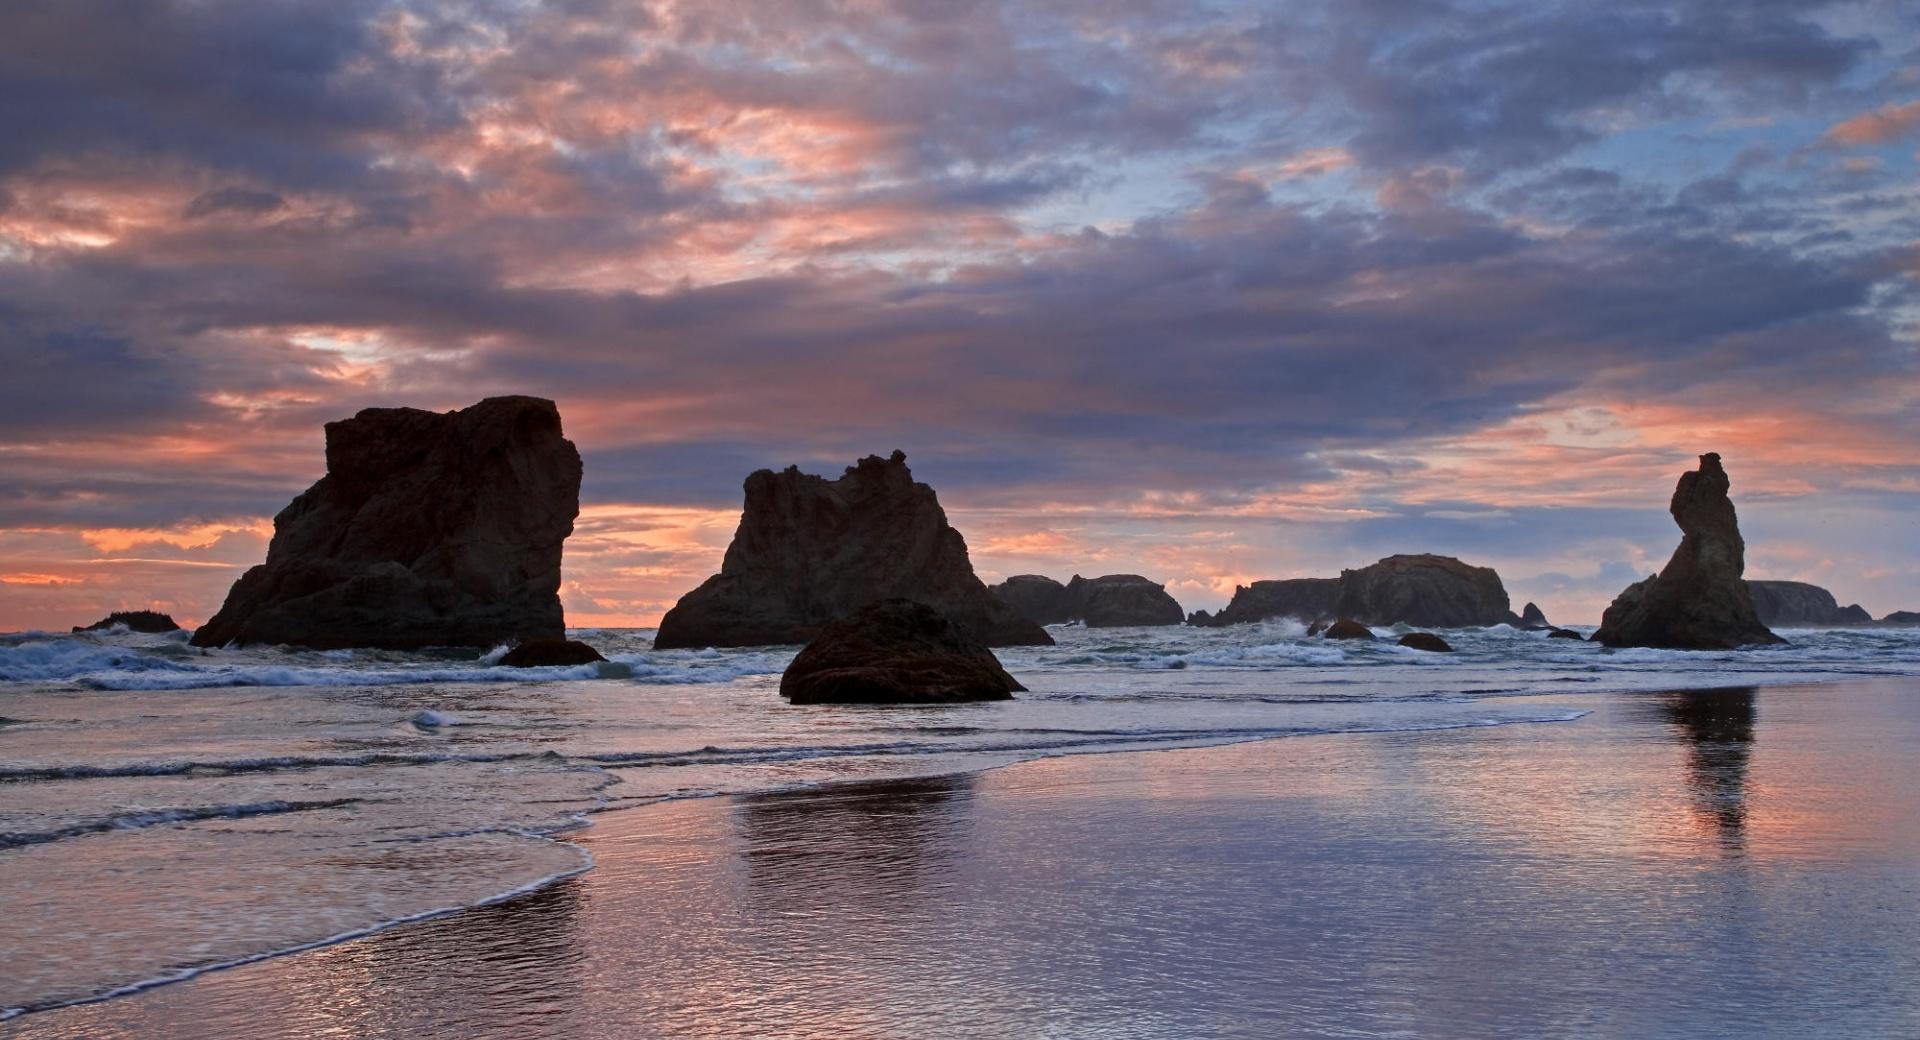 Sea Stacks At Sunset Bandon Oregon at 750 x 1334 iPhone 6 size wallpapers HD quality